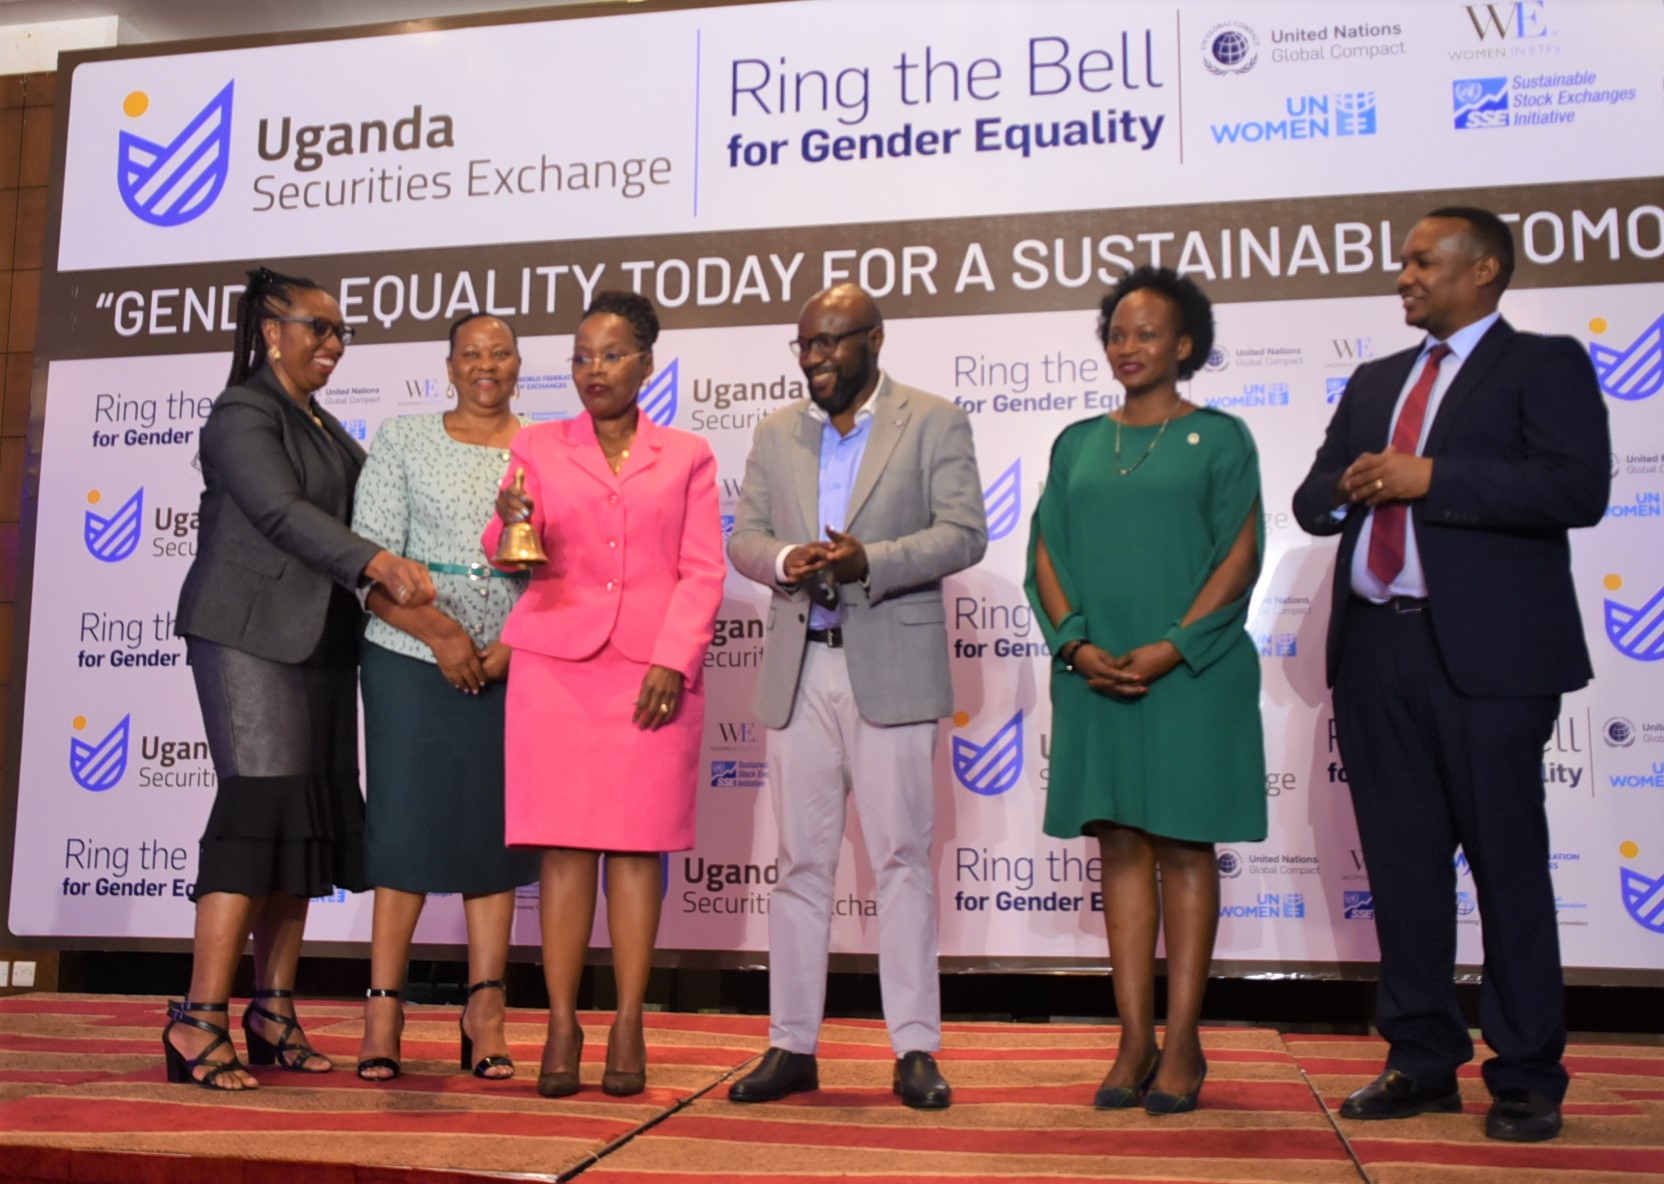 (UN Women Deputy Country Representative, ) stands alongside private sector representatives in Uganda